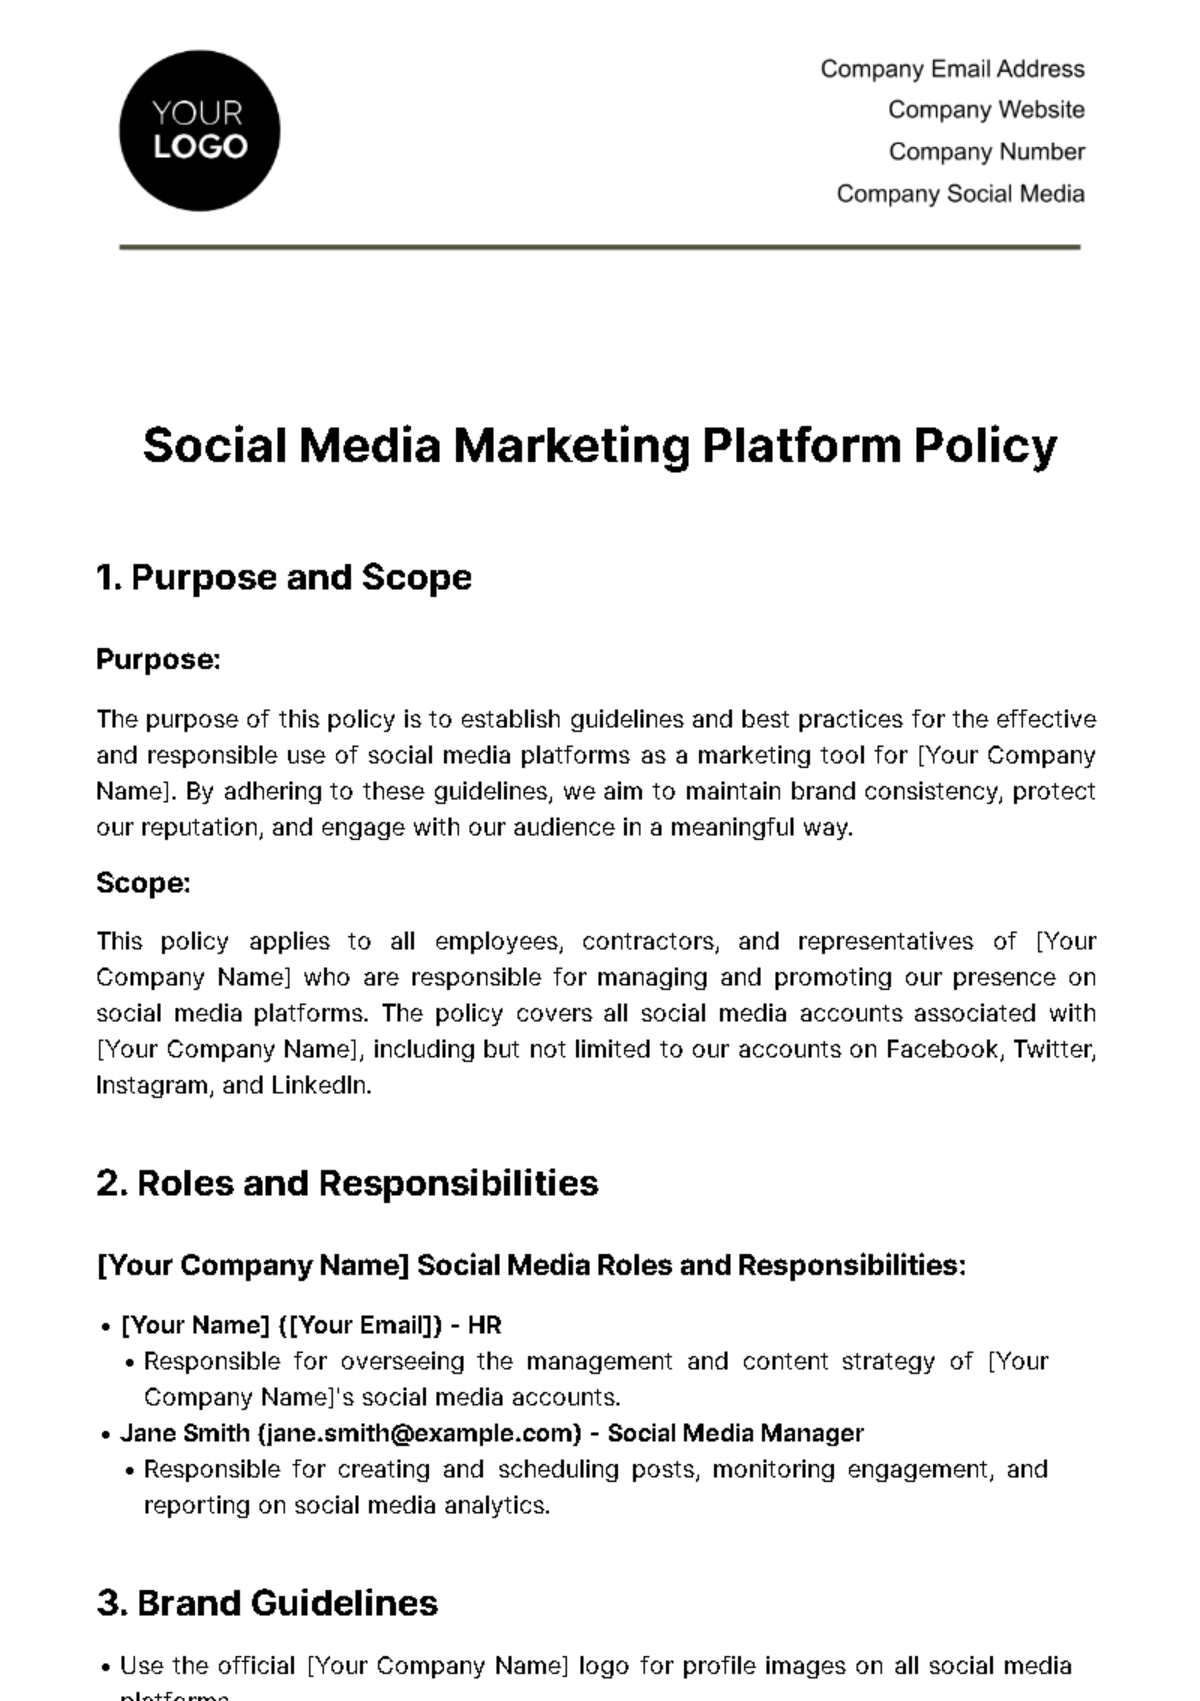 Free Social Media Marketing Platform Policy Template